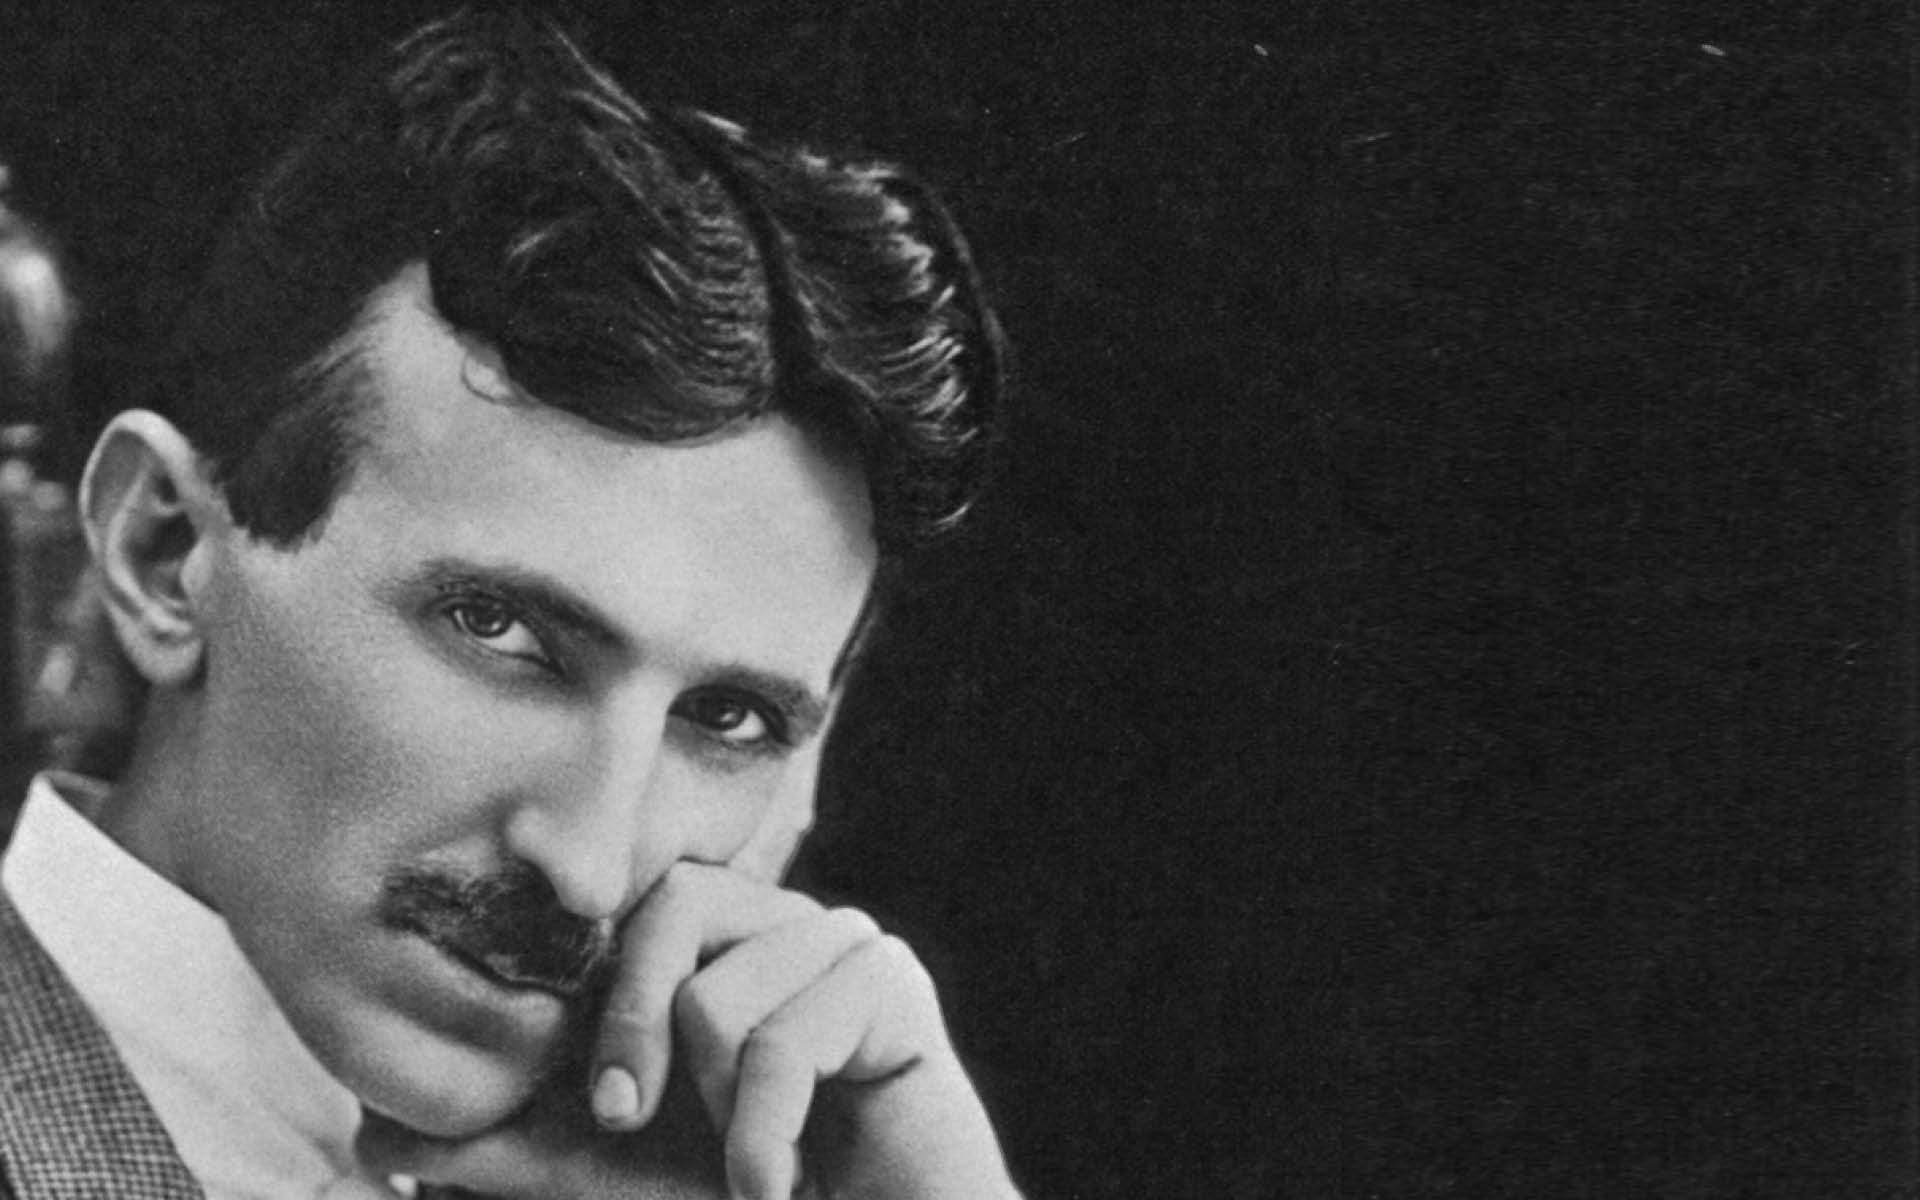 Nikola Tesla Wallpaper Image Photos Pictures Background